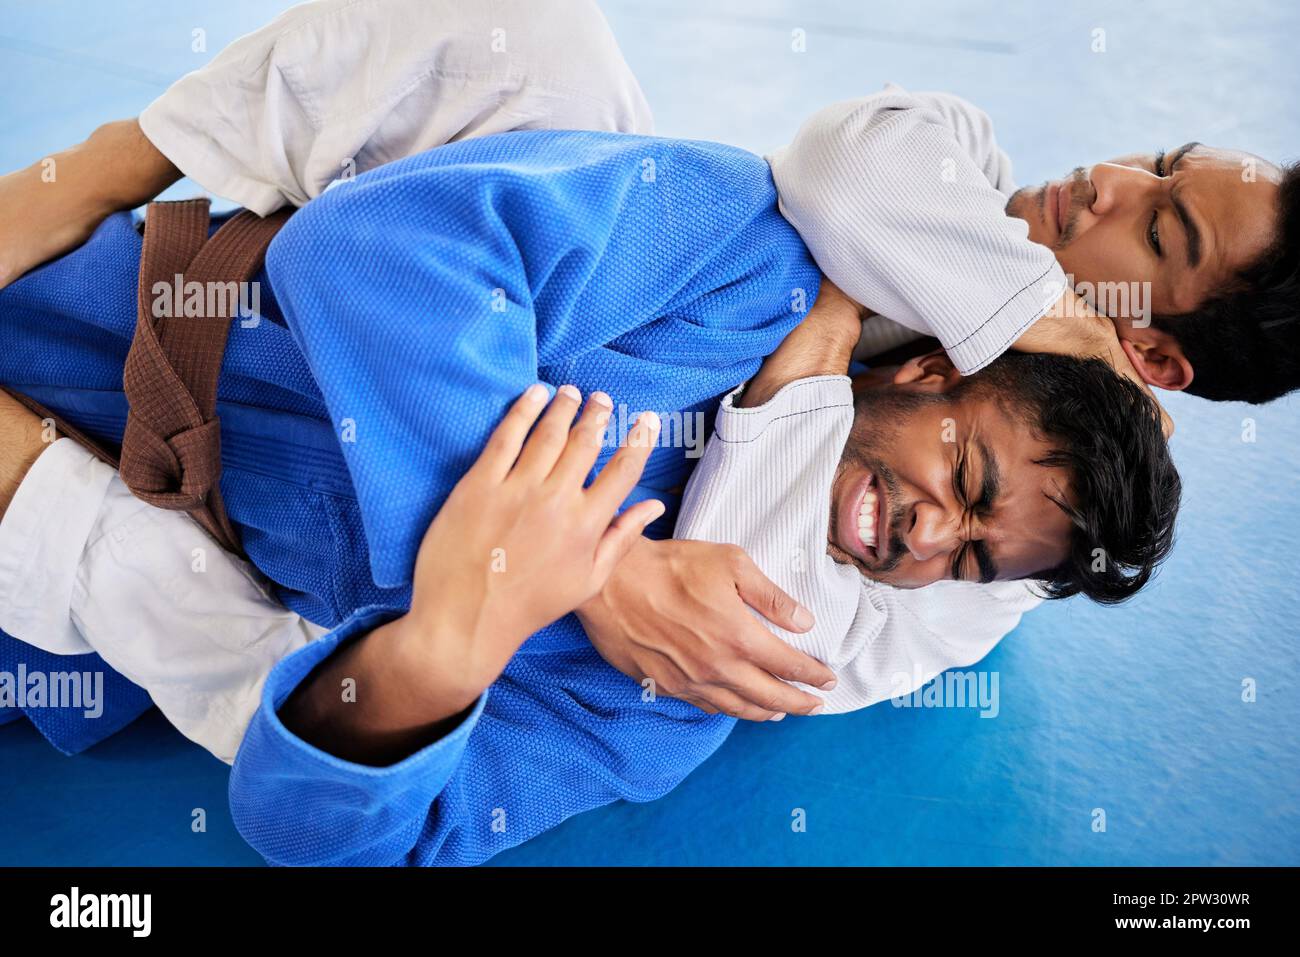 Woman makes choke hold in self-defense training Stock Photo - Alamy